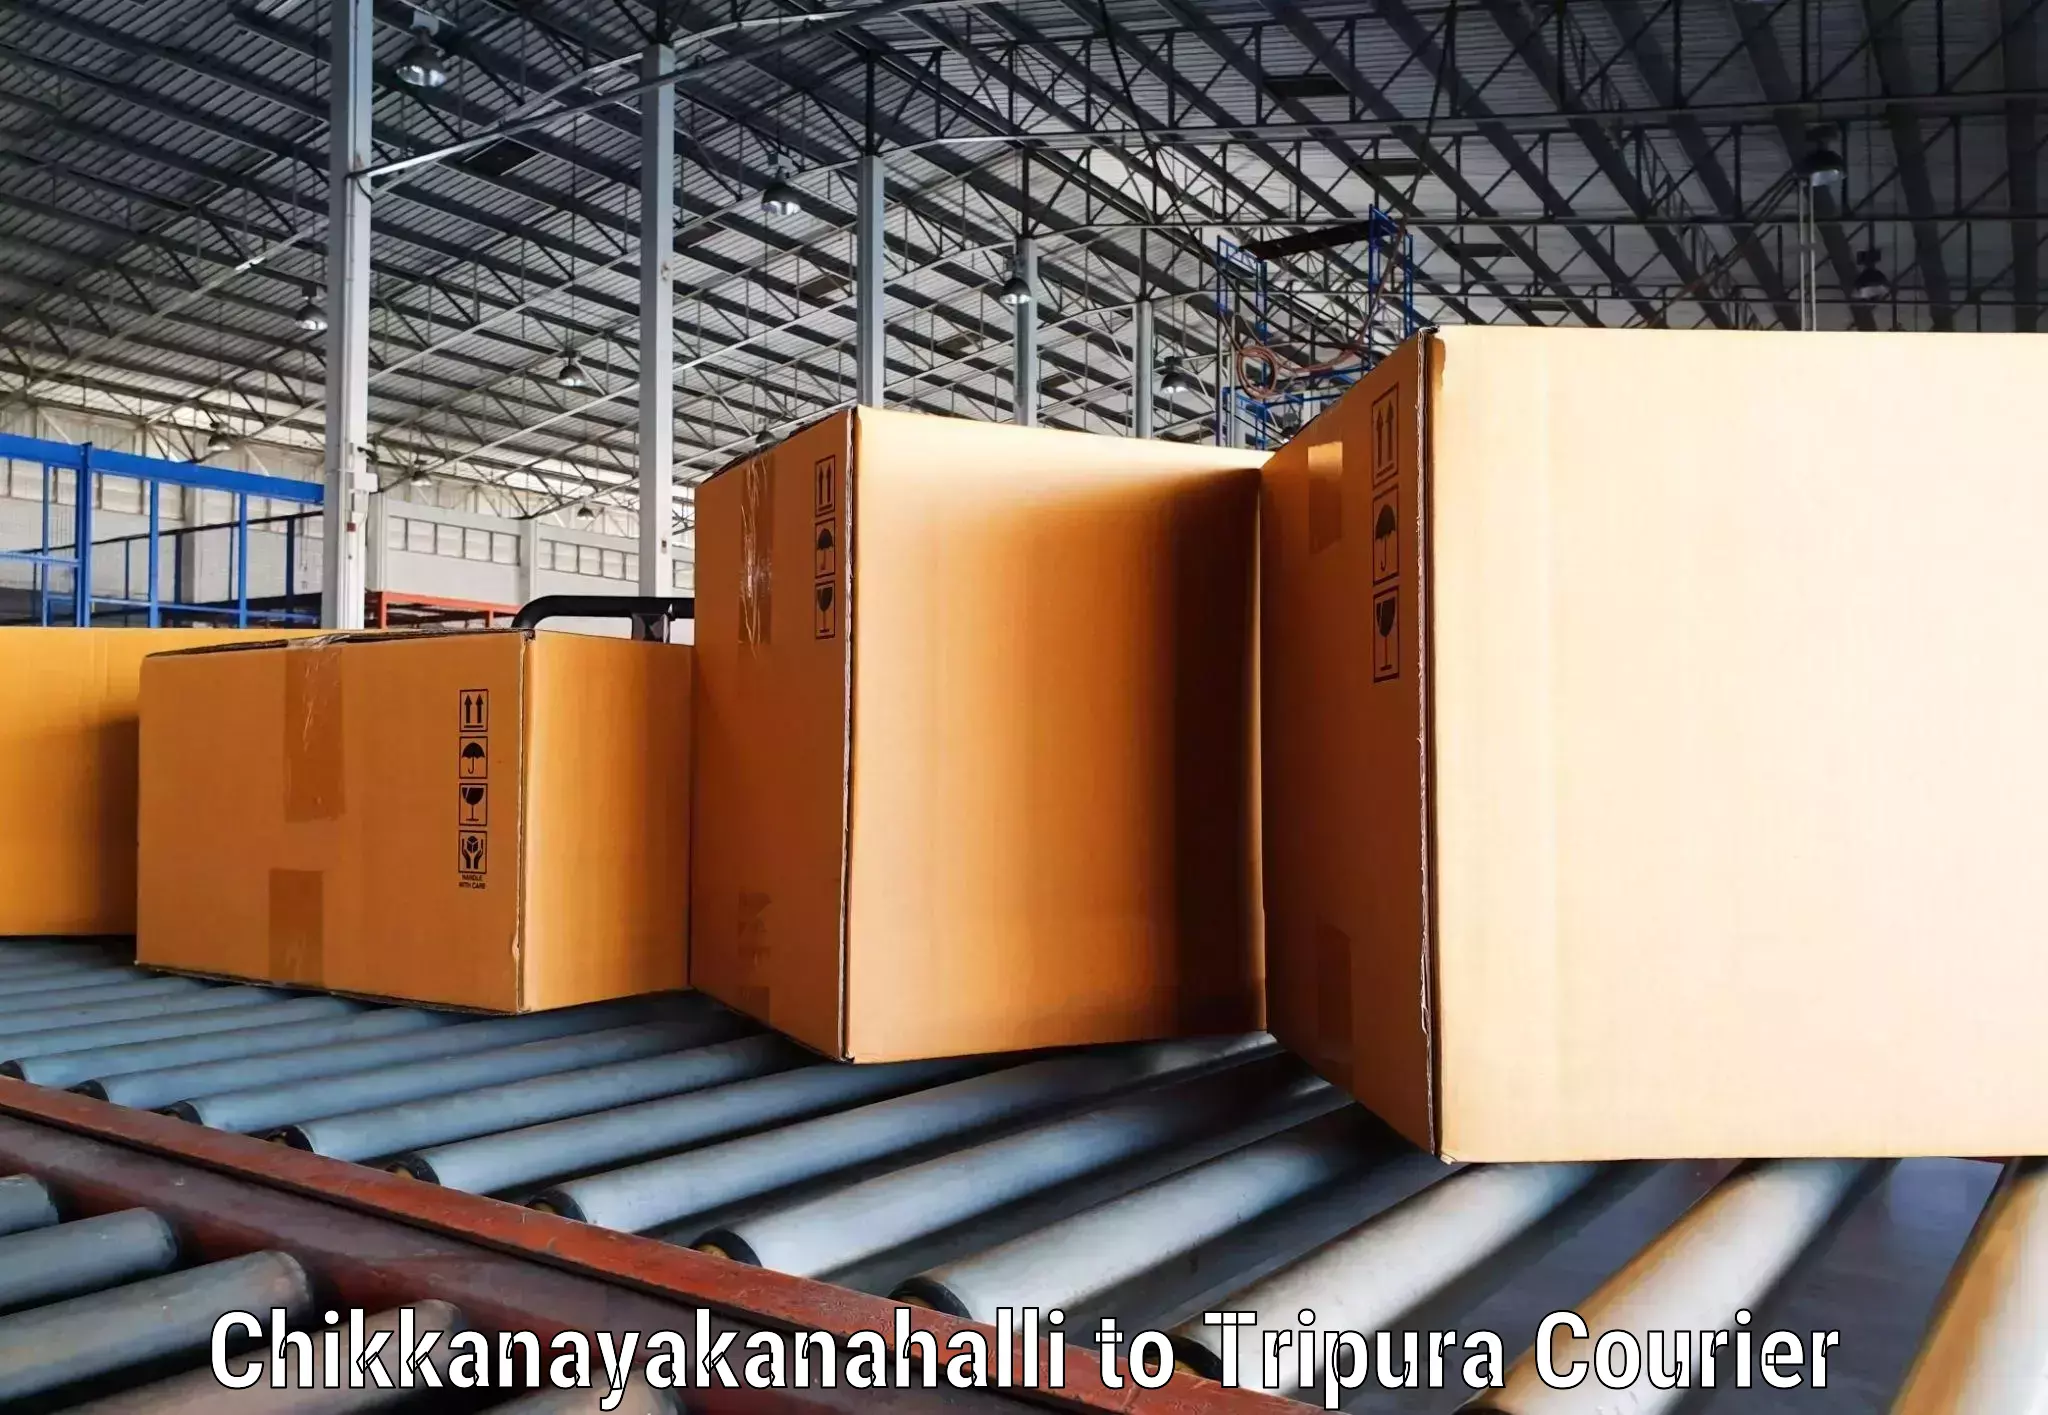 Efficient shipping operations Chikkanayakanahalli to Manughat